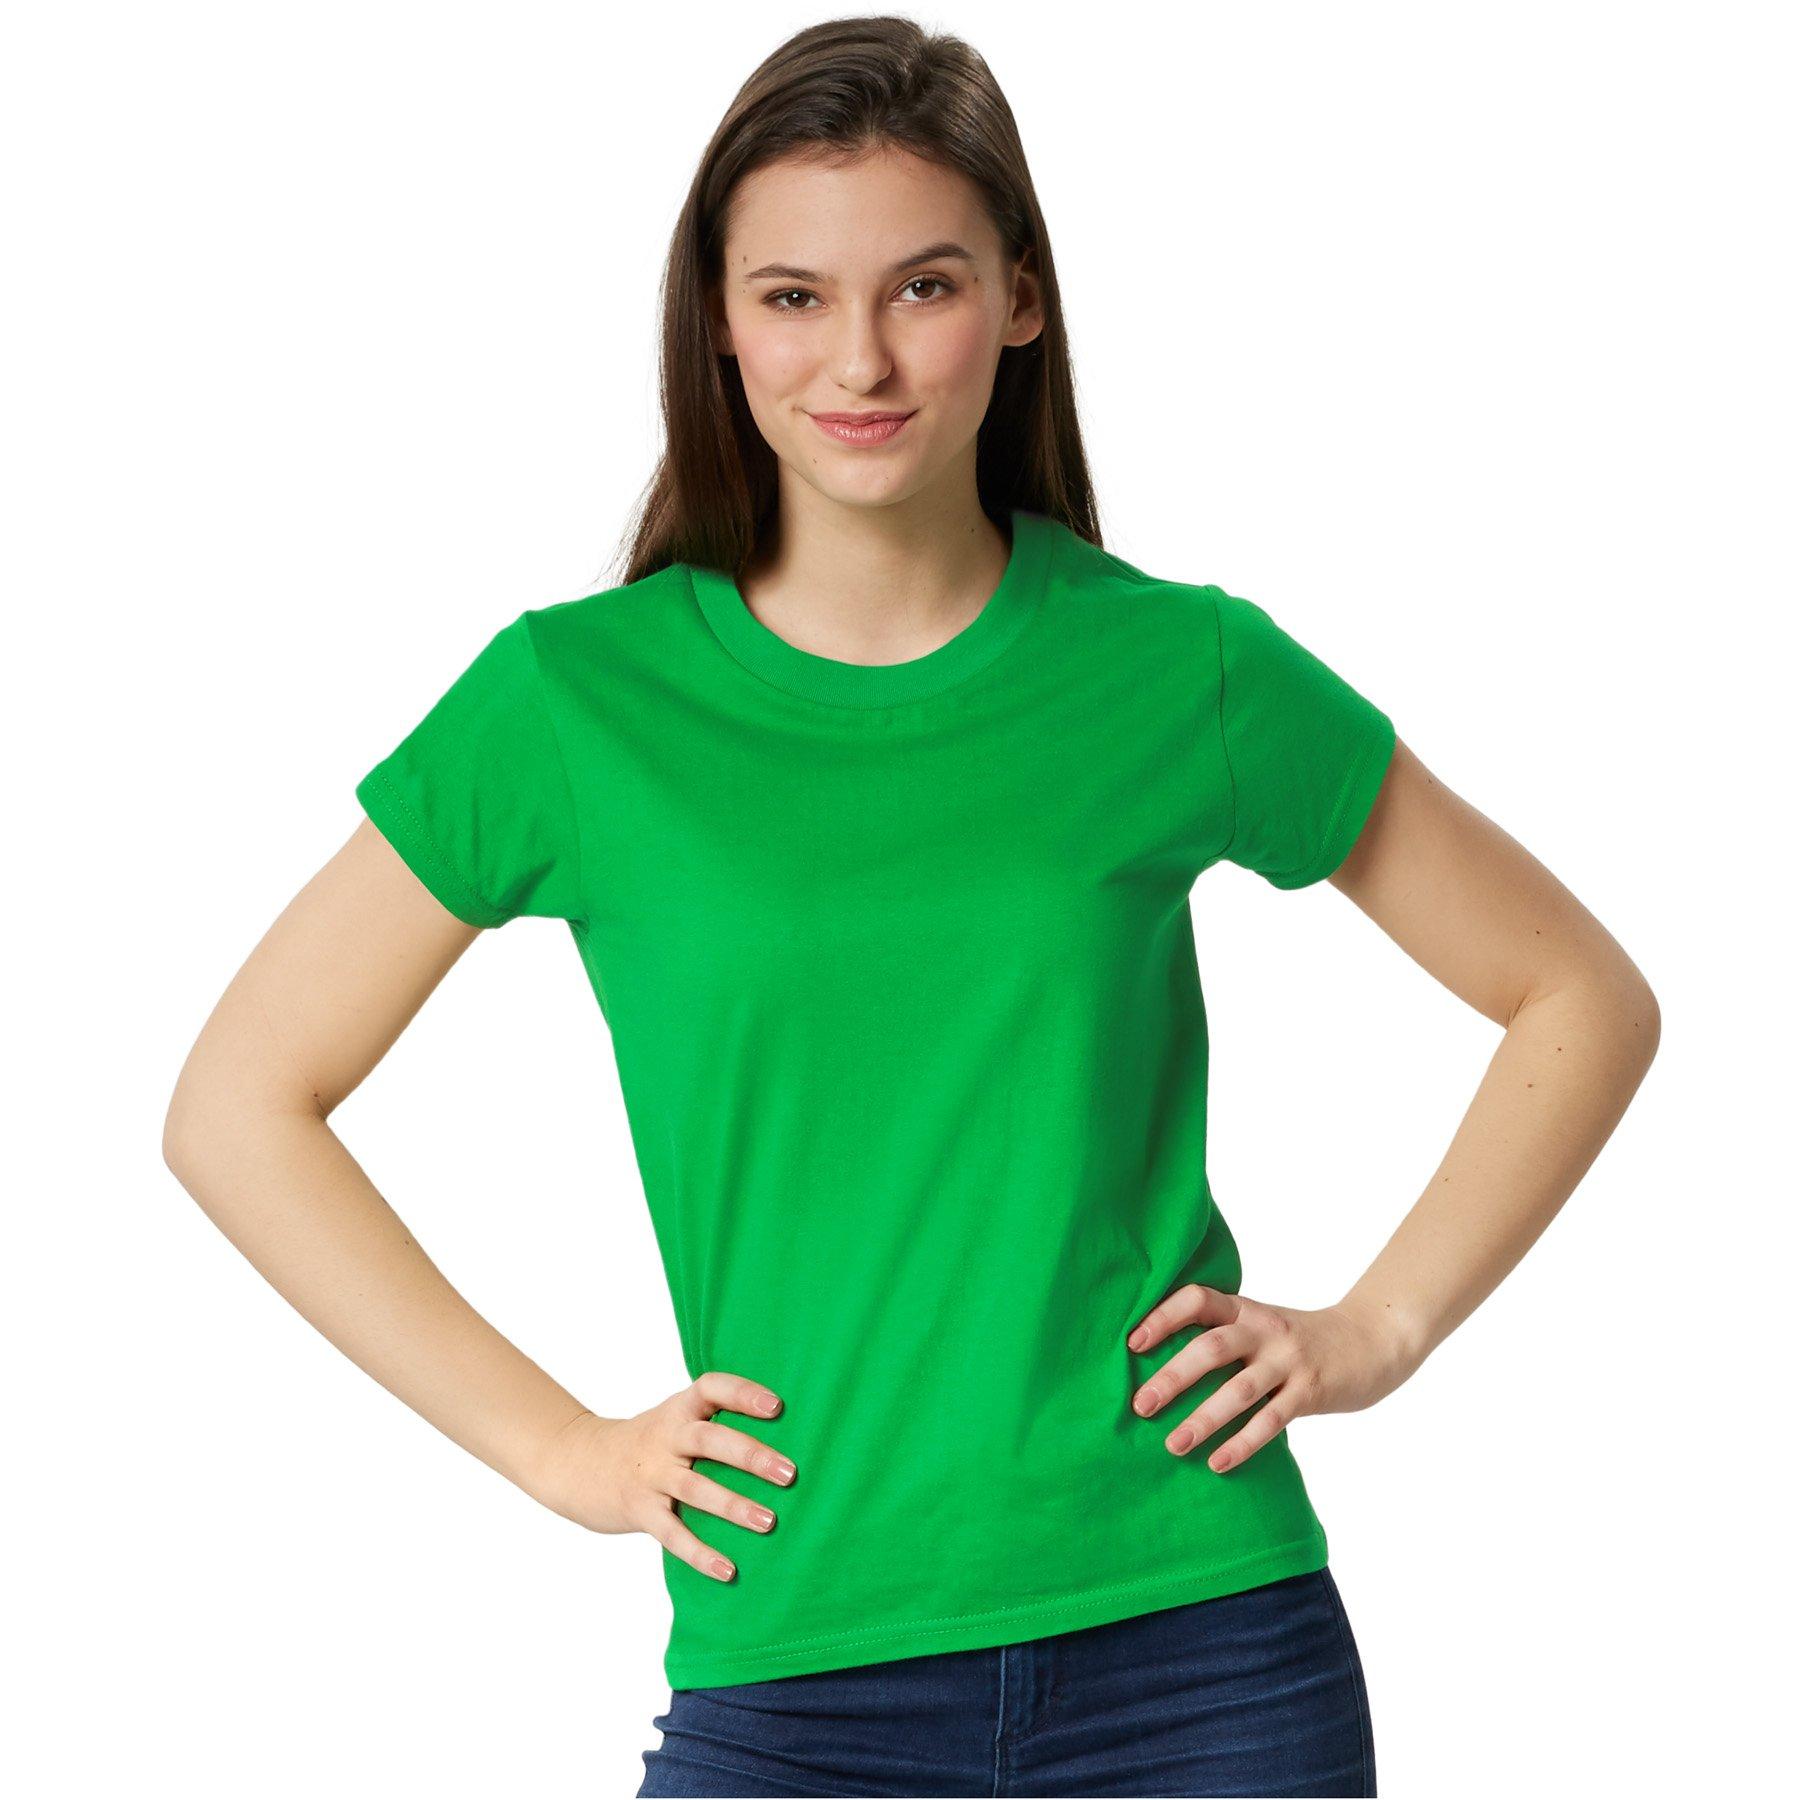 T-shirt Frauen Damen Grün XL von Tectake